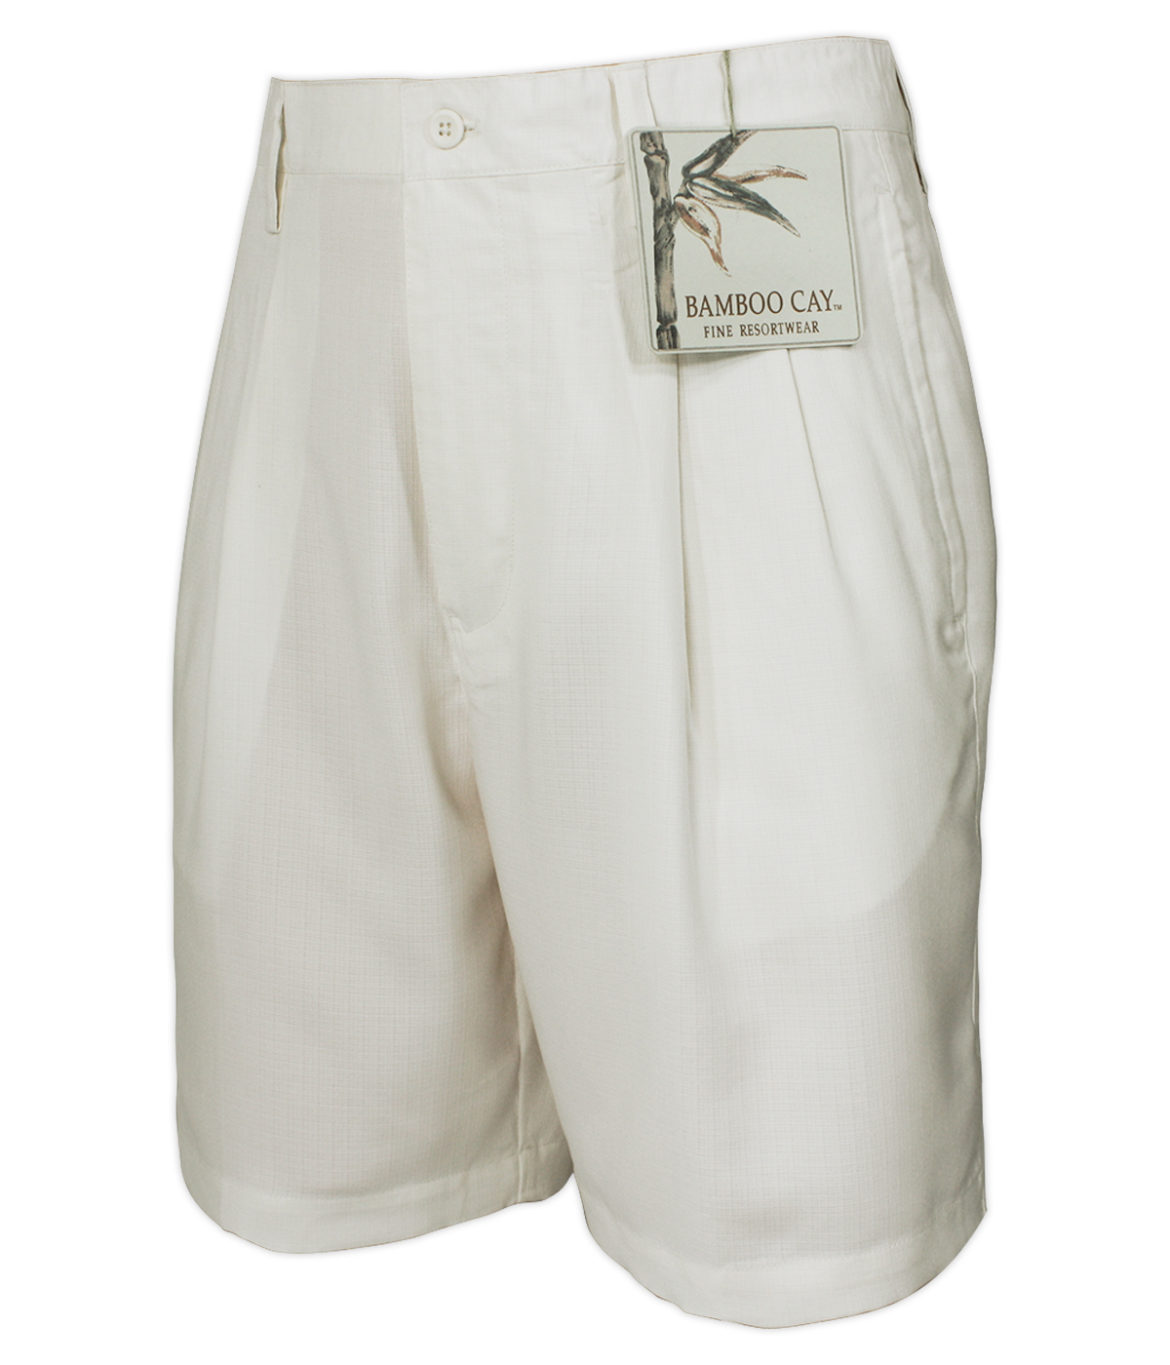 Bamboo Cay Men's Shorts - Off White